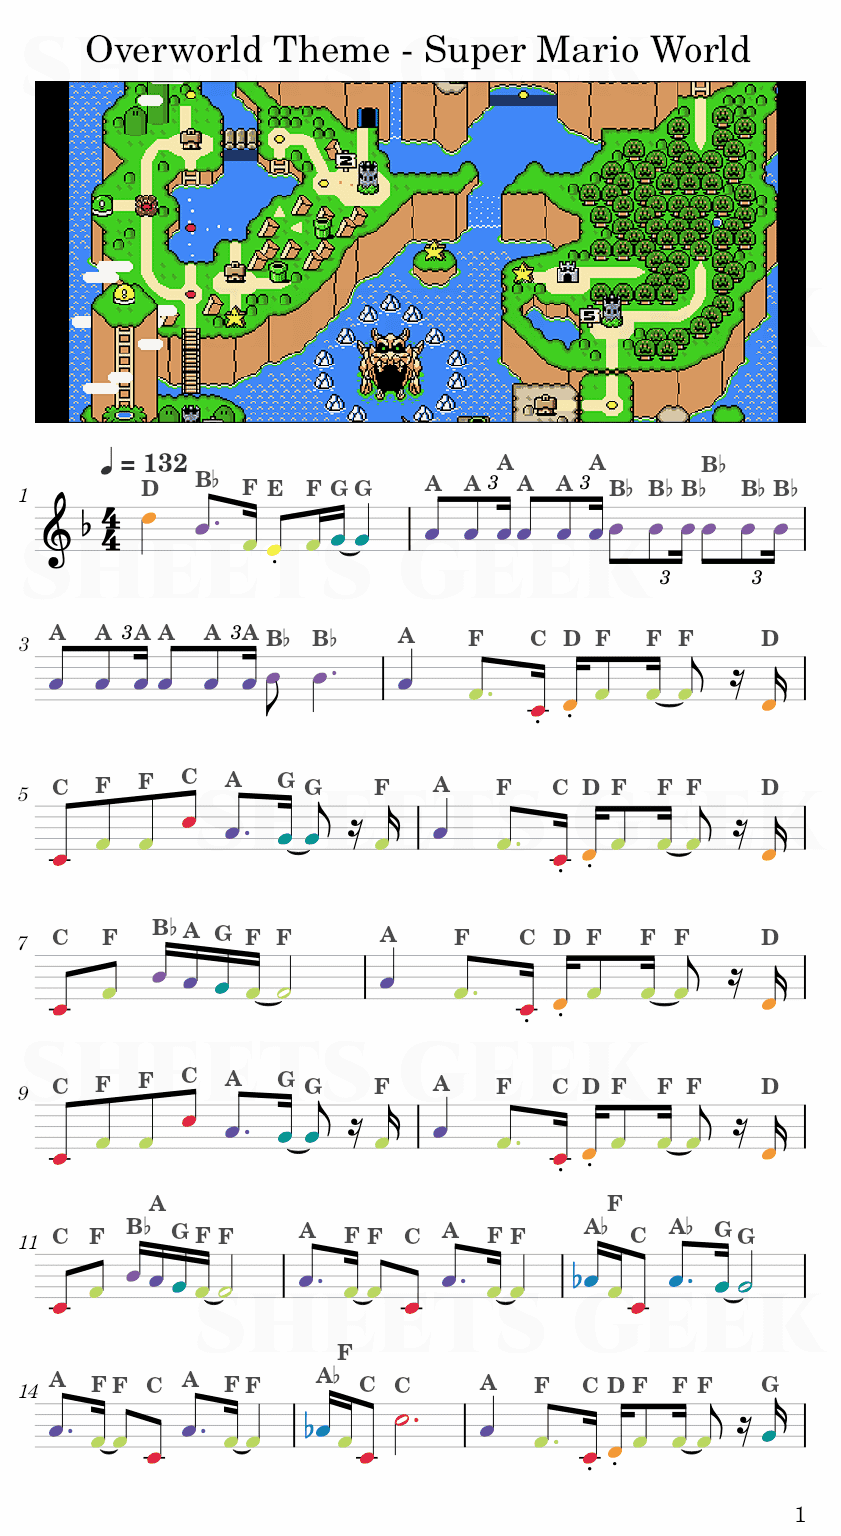 Overworld Theme - Super Mario World Easy Sheet Music Free for piano, keyboard, flute, violin, sax, cello page 1